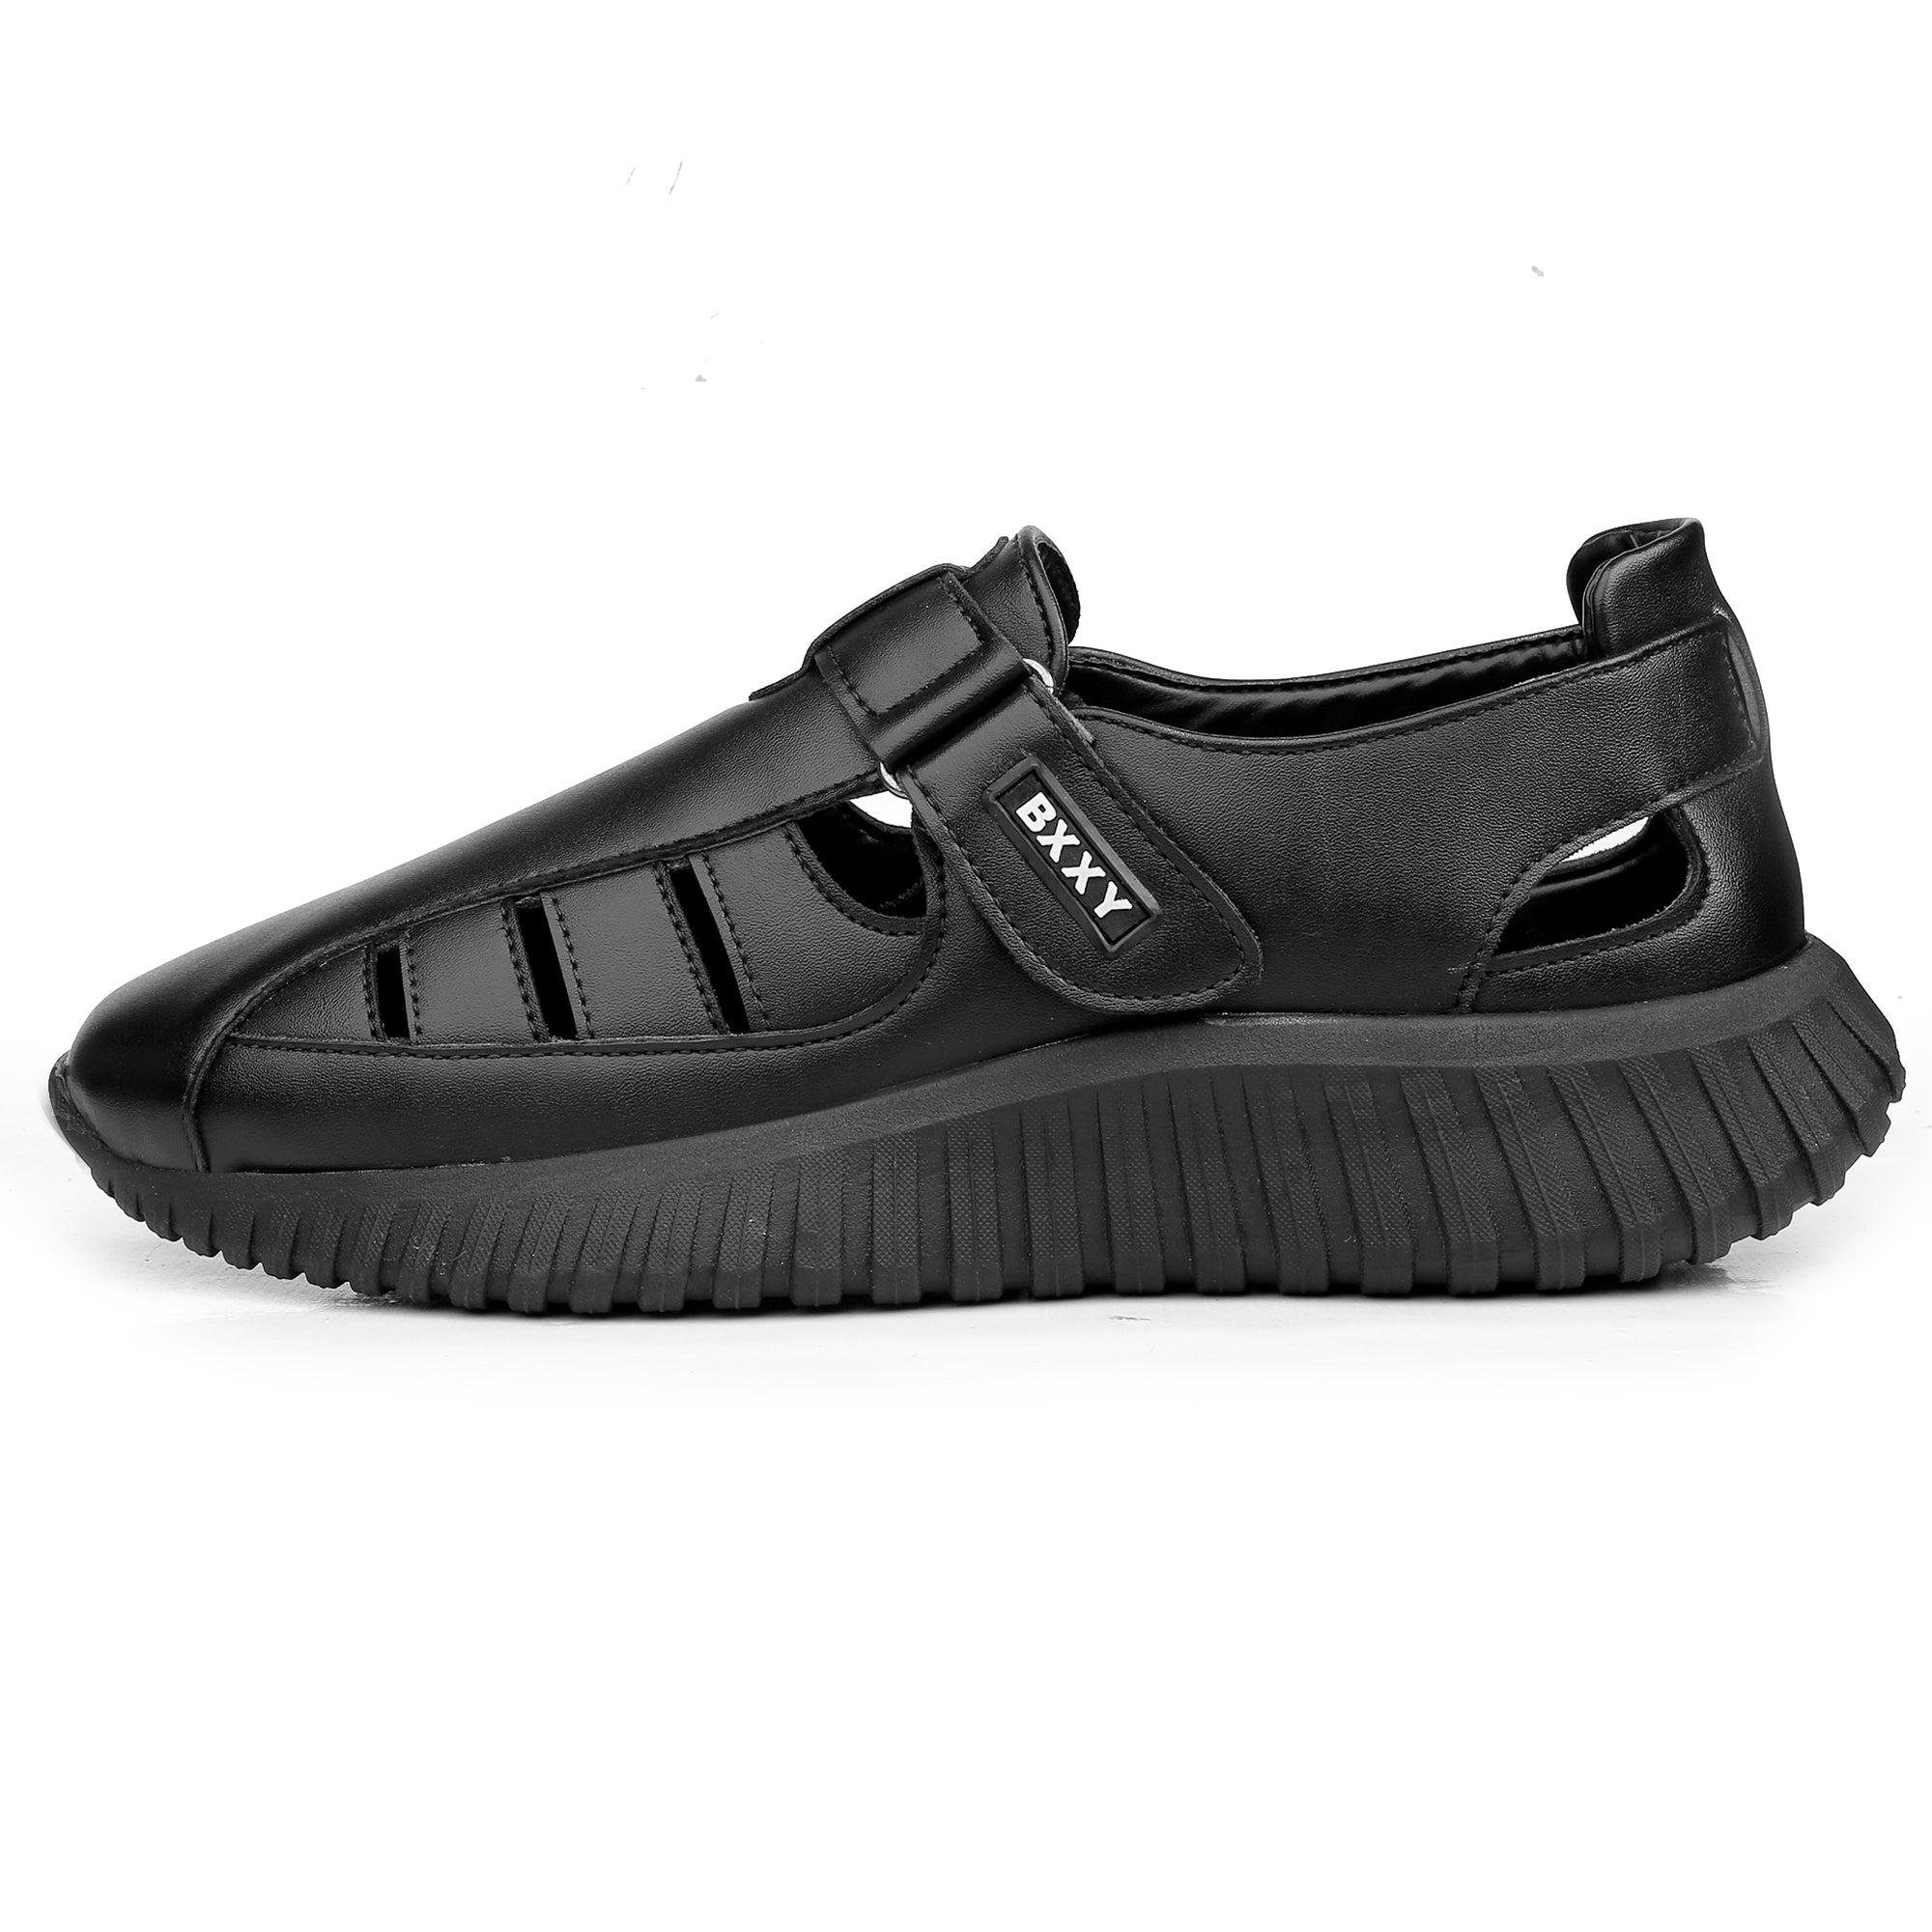 New Stylish Men's Footwear | Men's Fashion Sandals | Attractive Black  Casual Flip Flops | Latest